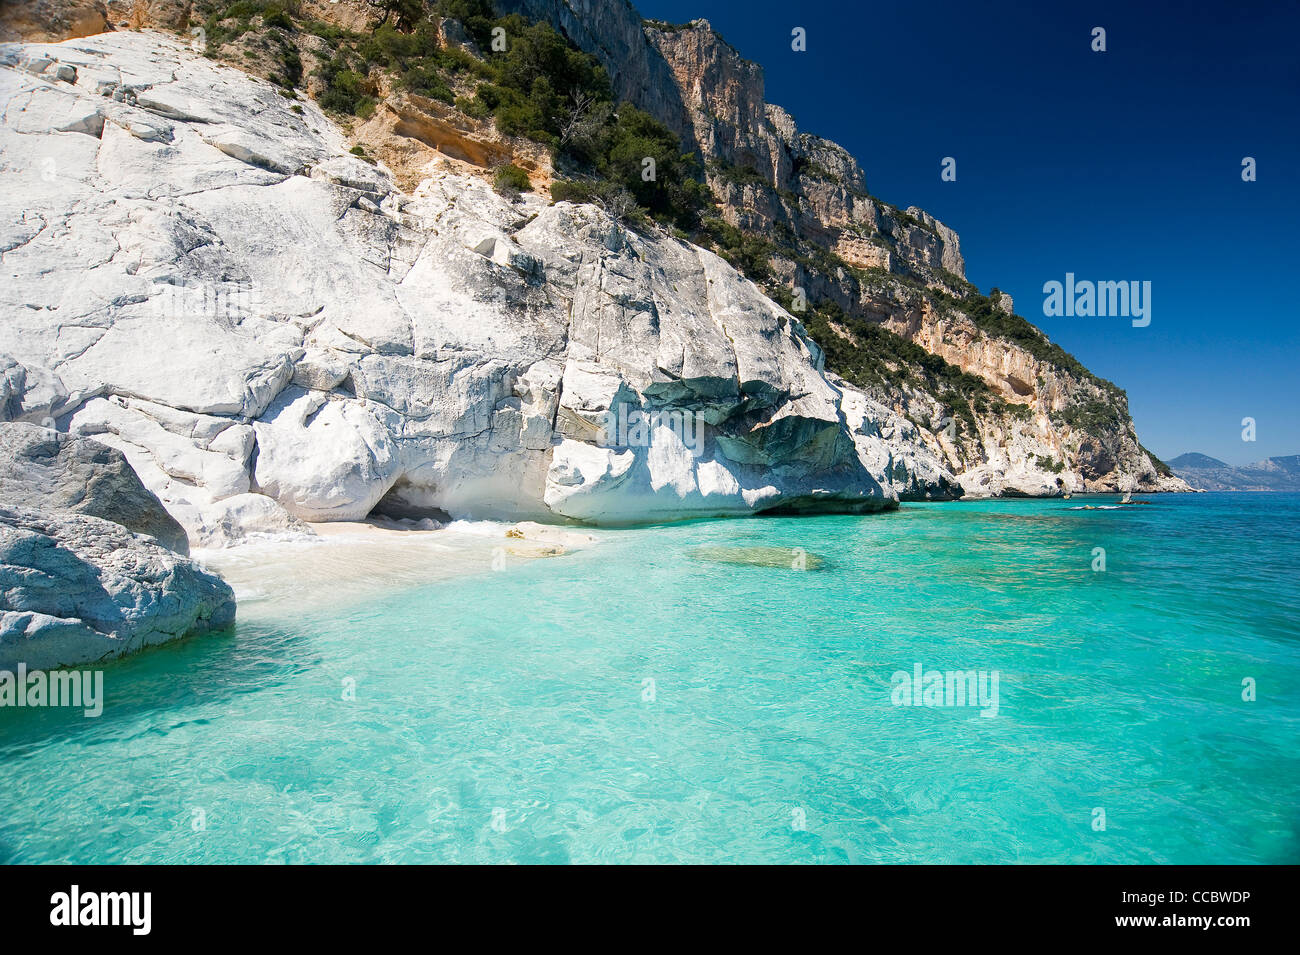 Cala Goloritzè, Baunei, provincia Ogliastra, Golfo di Orosei, Sardegna,  Italia Foto stock - Alamy